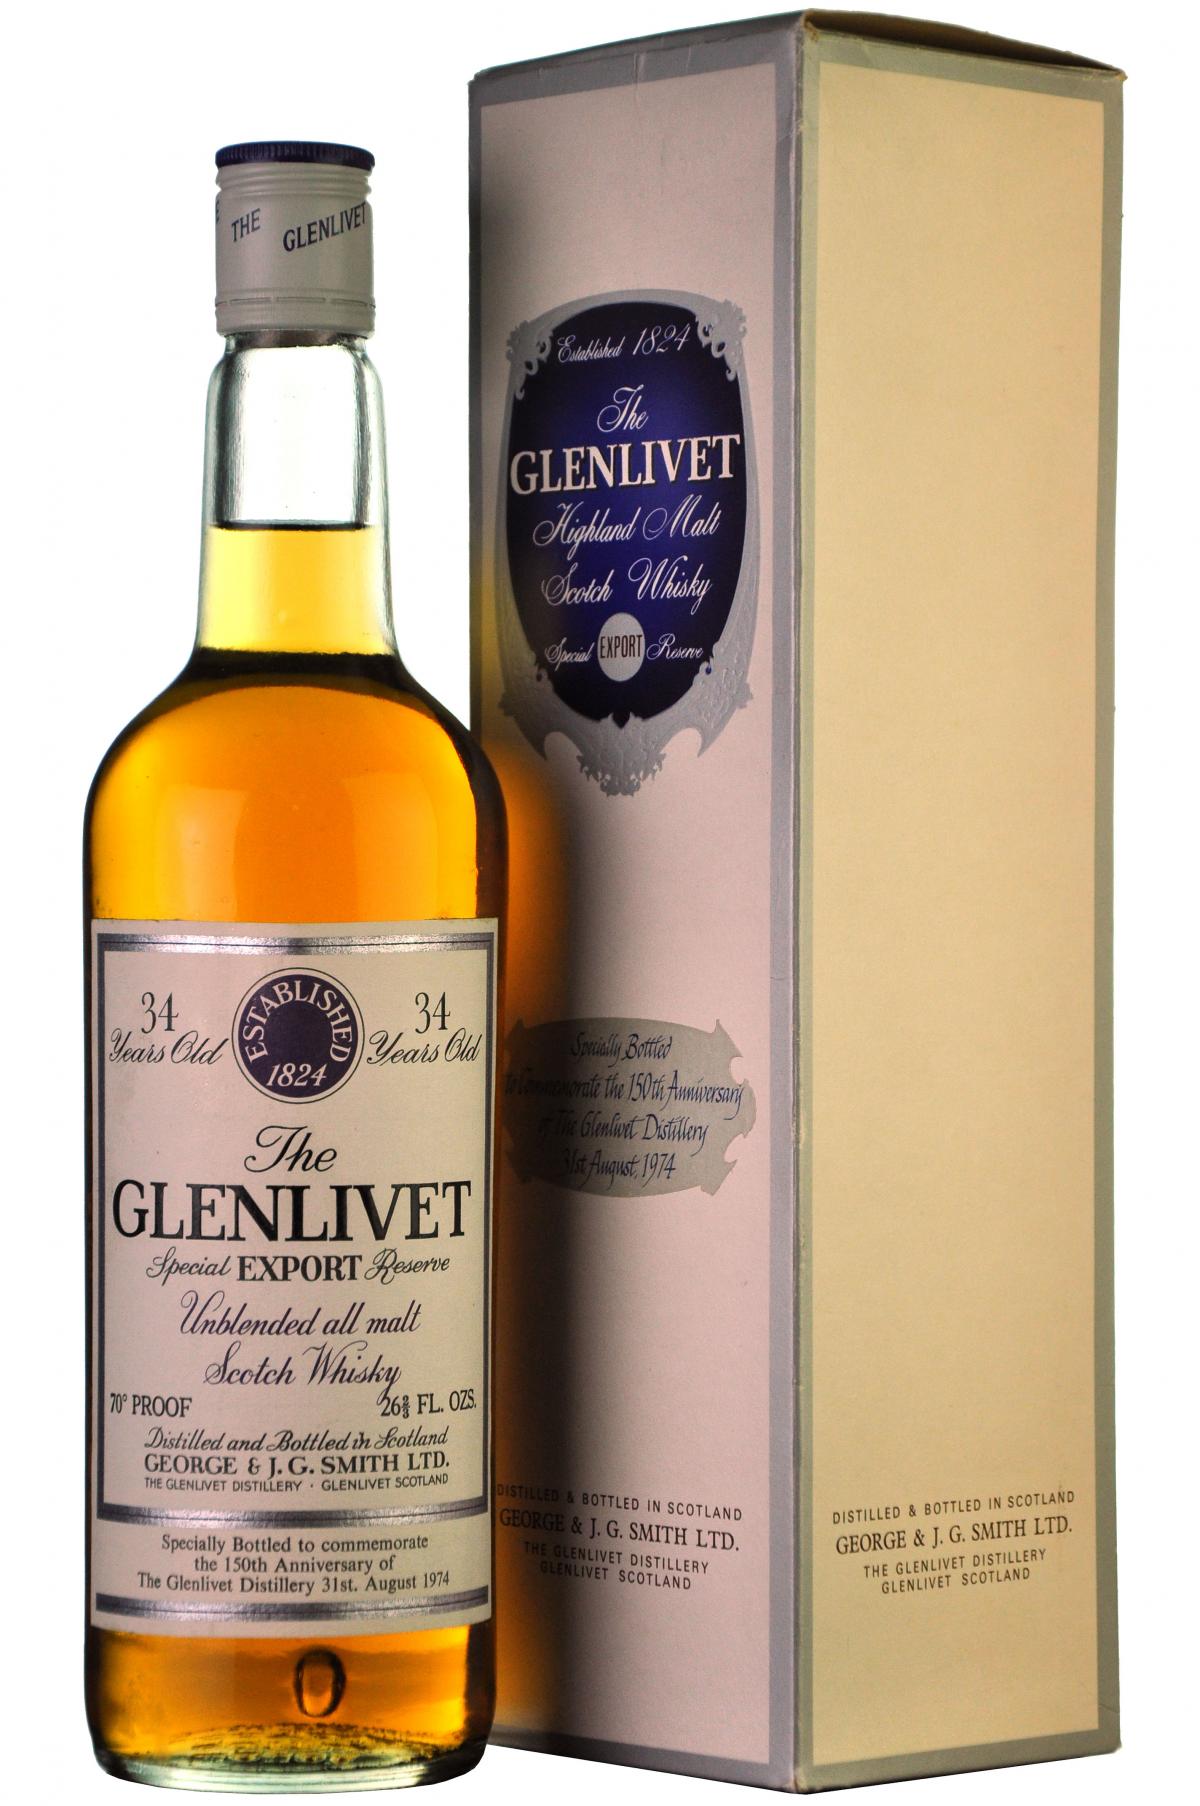 glenlivet 34 year old, 150th anniversary, speyside single malt scotch whisky